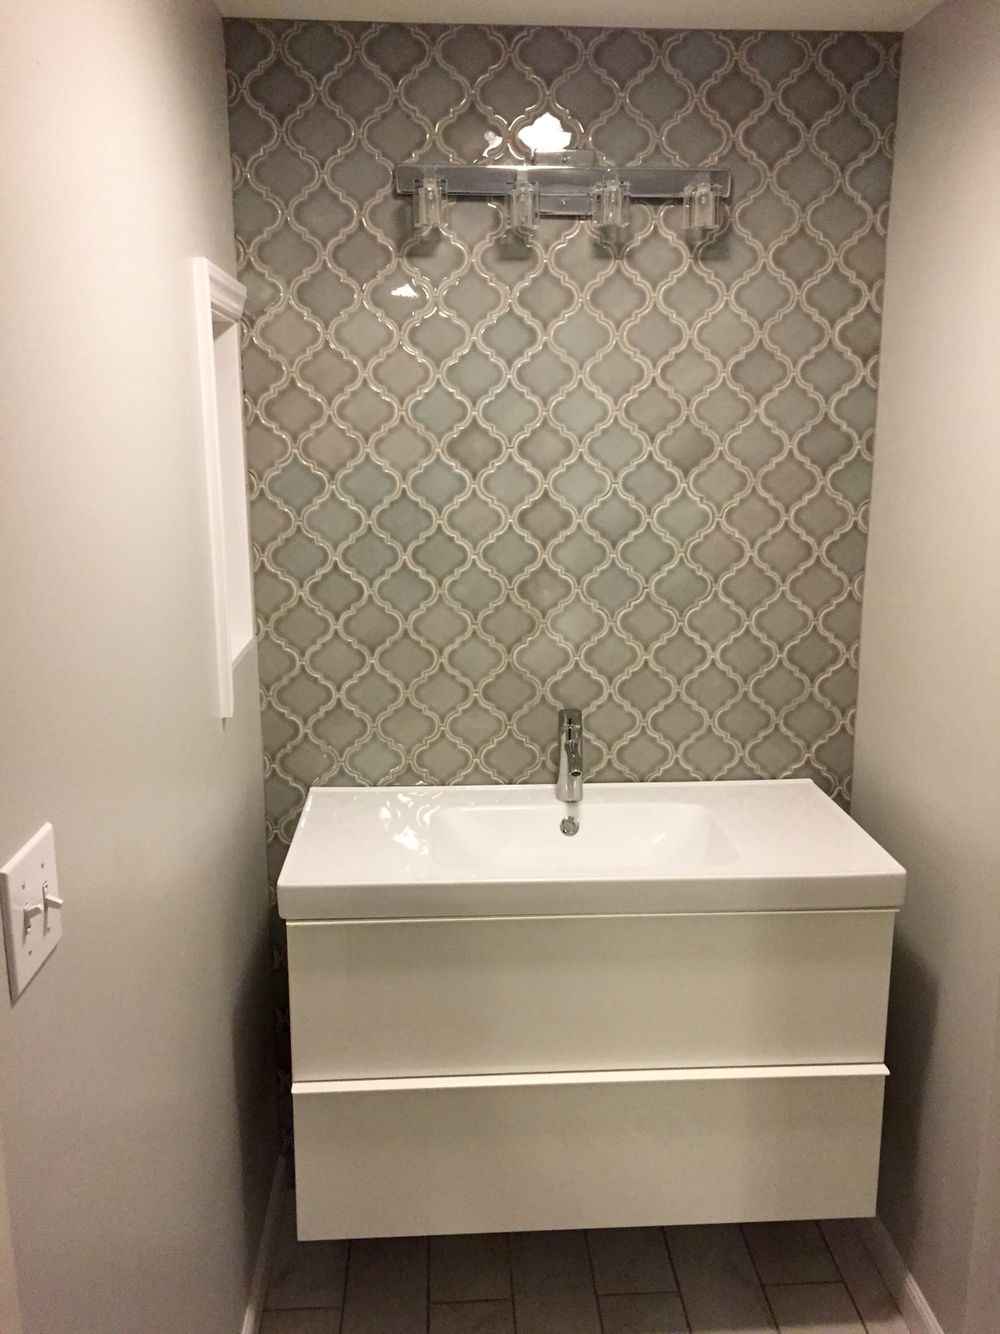 Home Depot Bathroom Shower Tile
 Home Depot Dove gray Arabesque tile bathroom wall